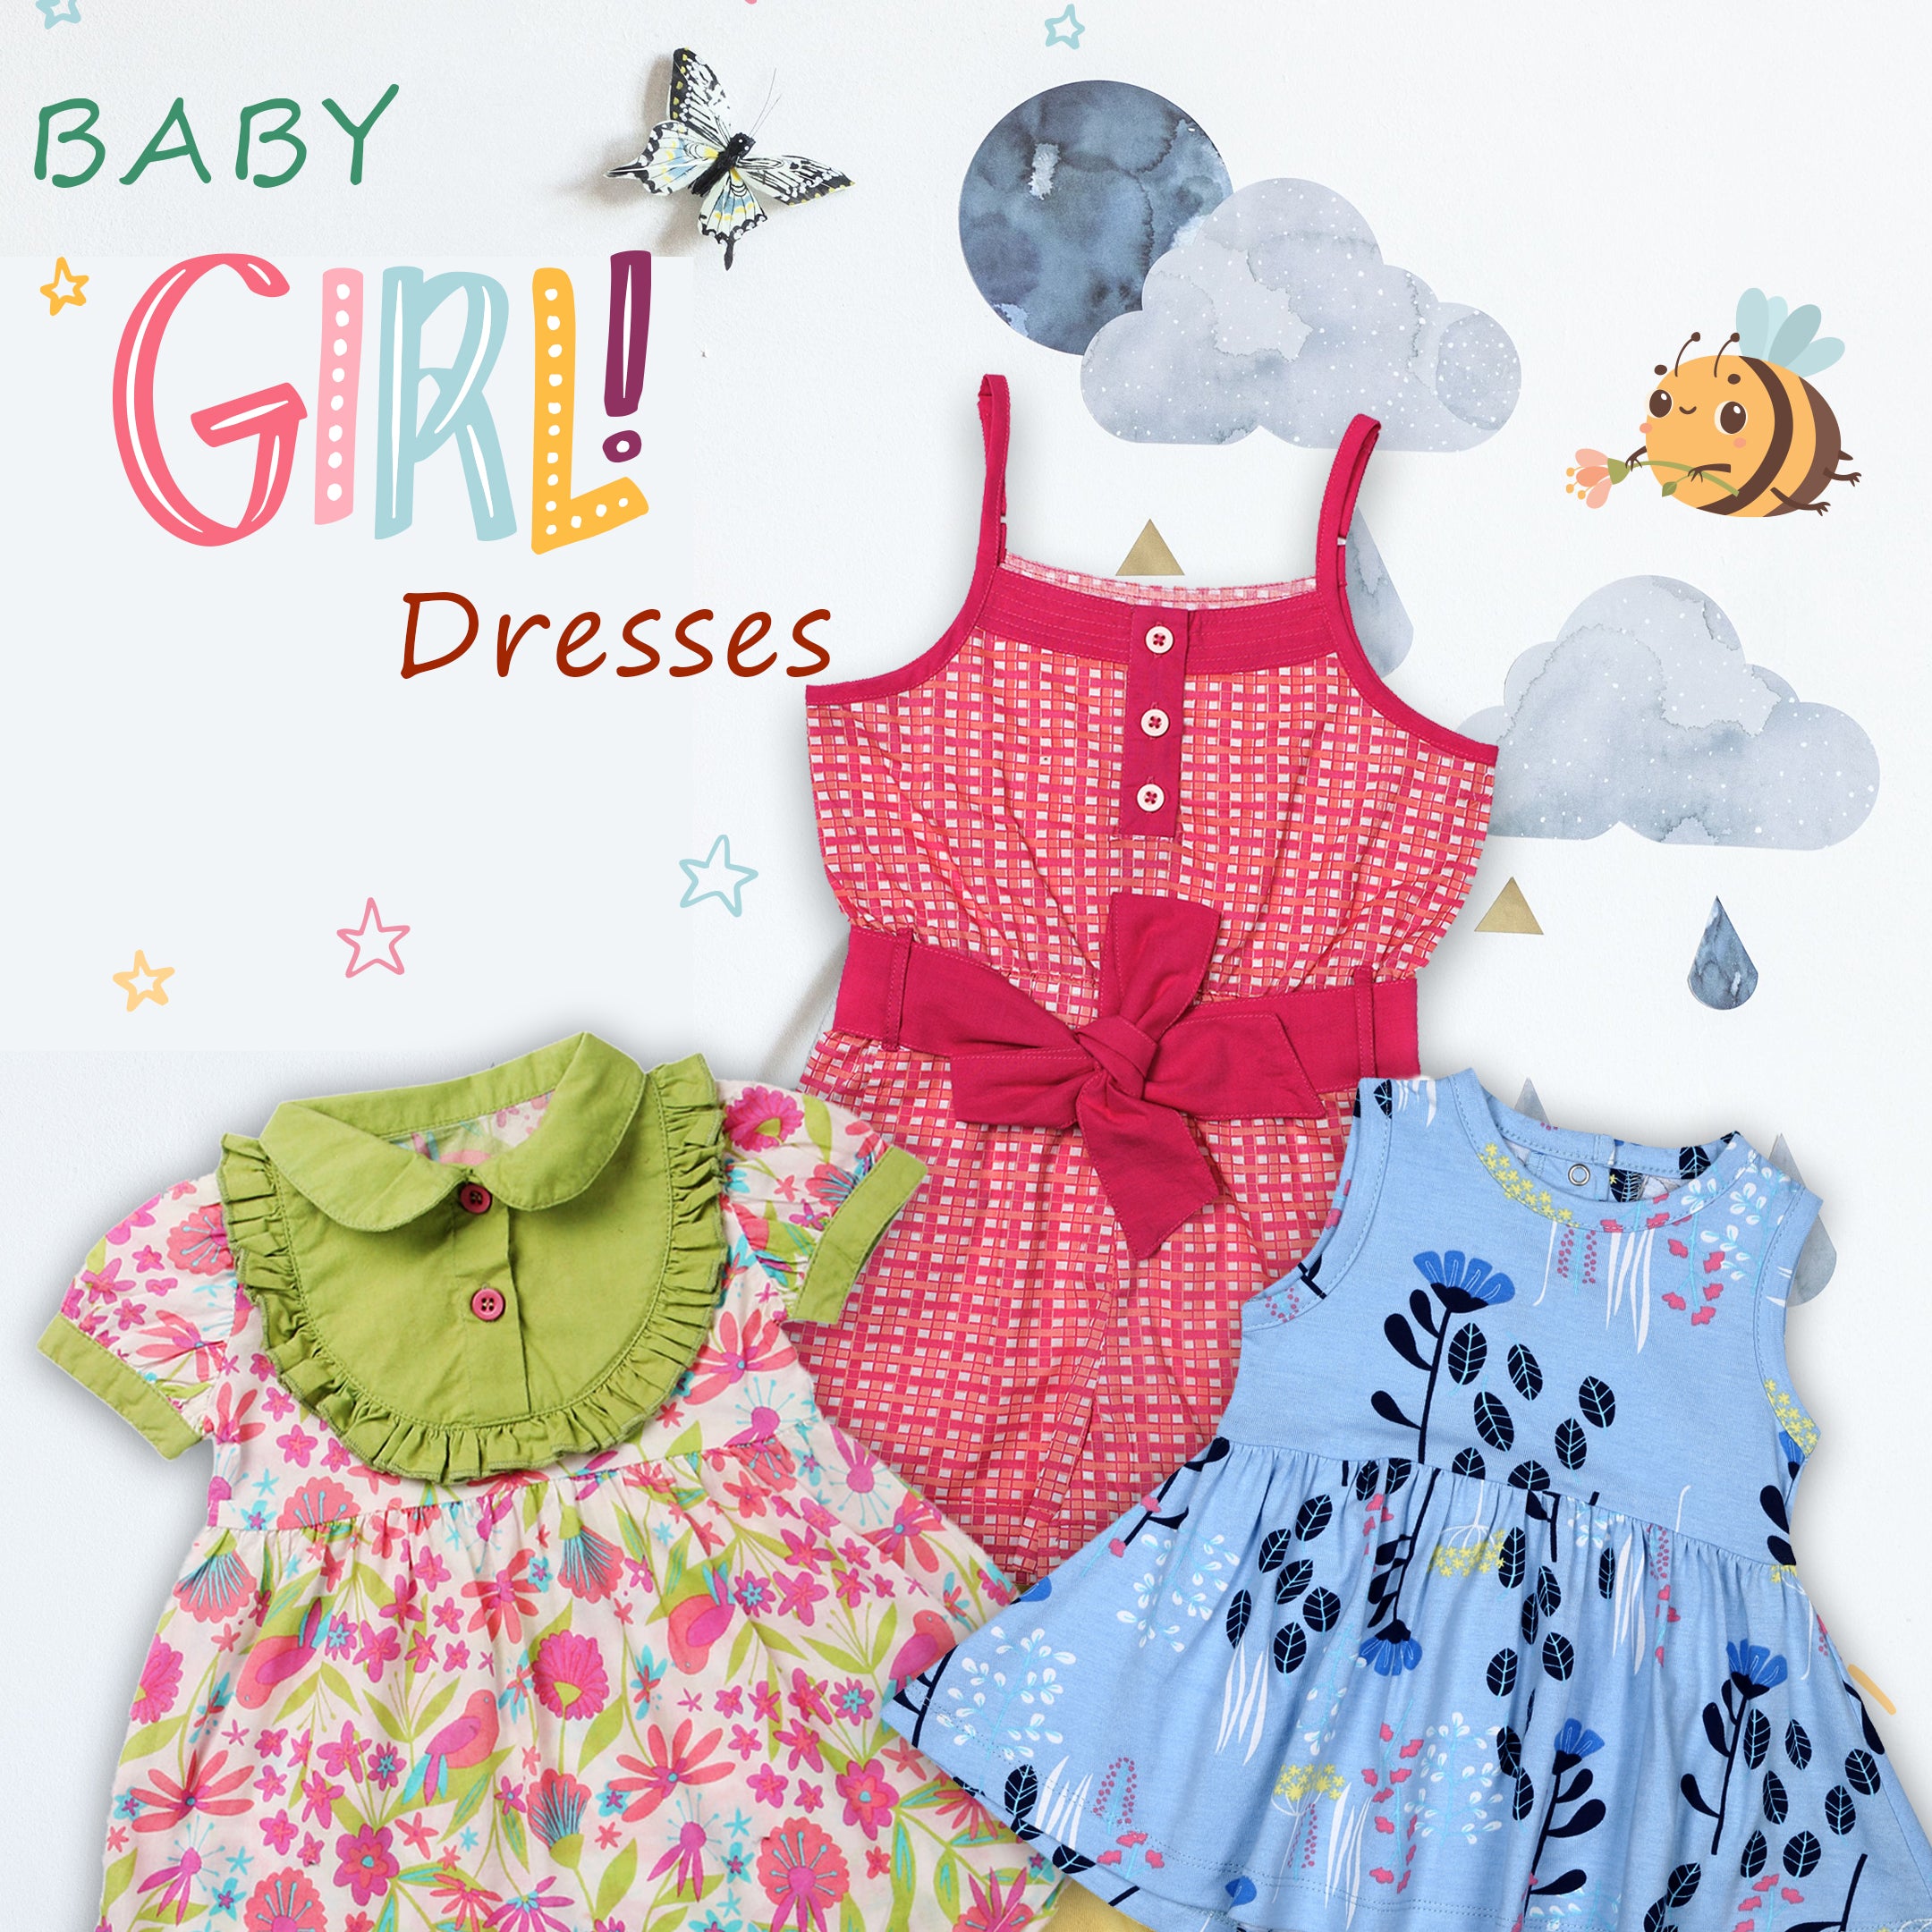 Baby girls dress design ideas - Trendy creative fashion ideas | Facebook